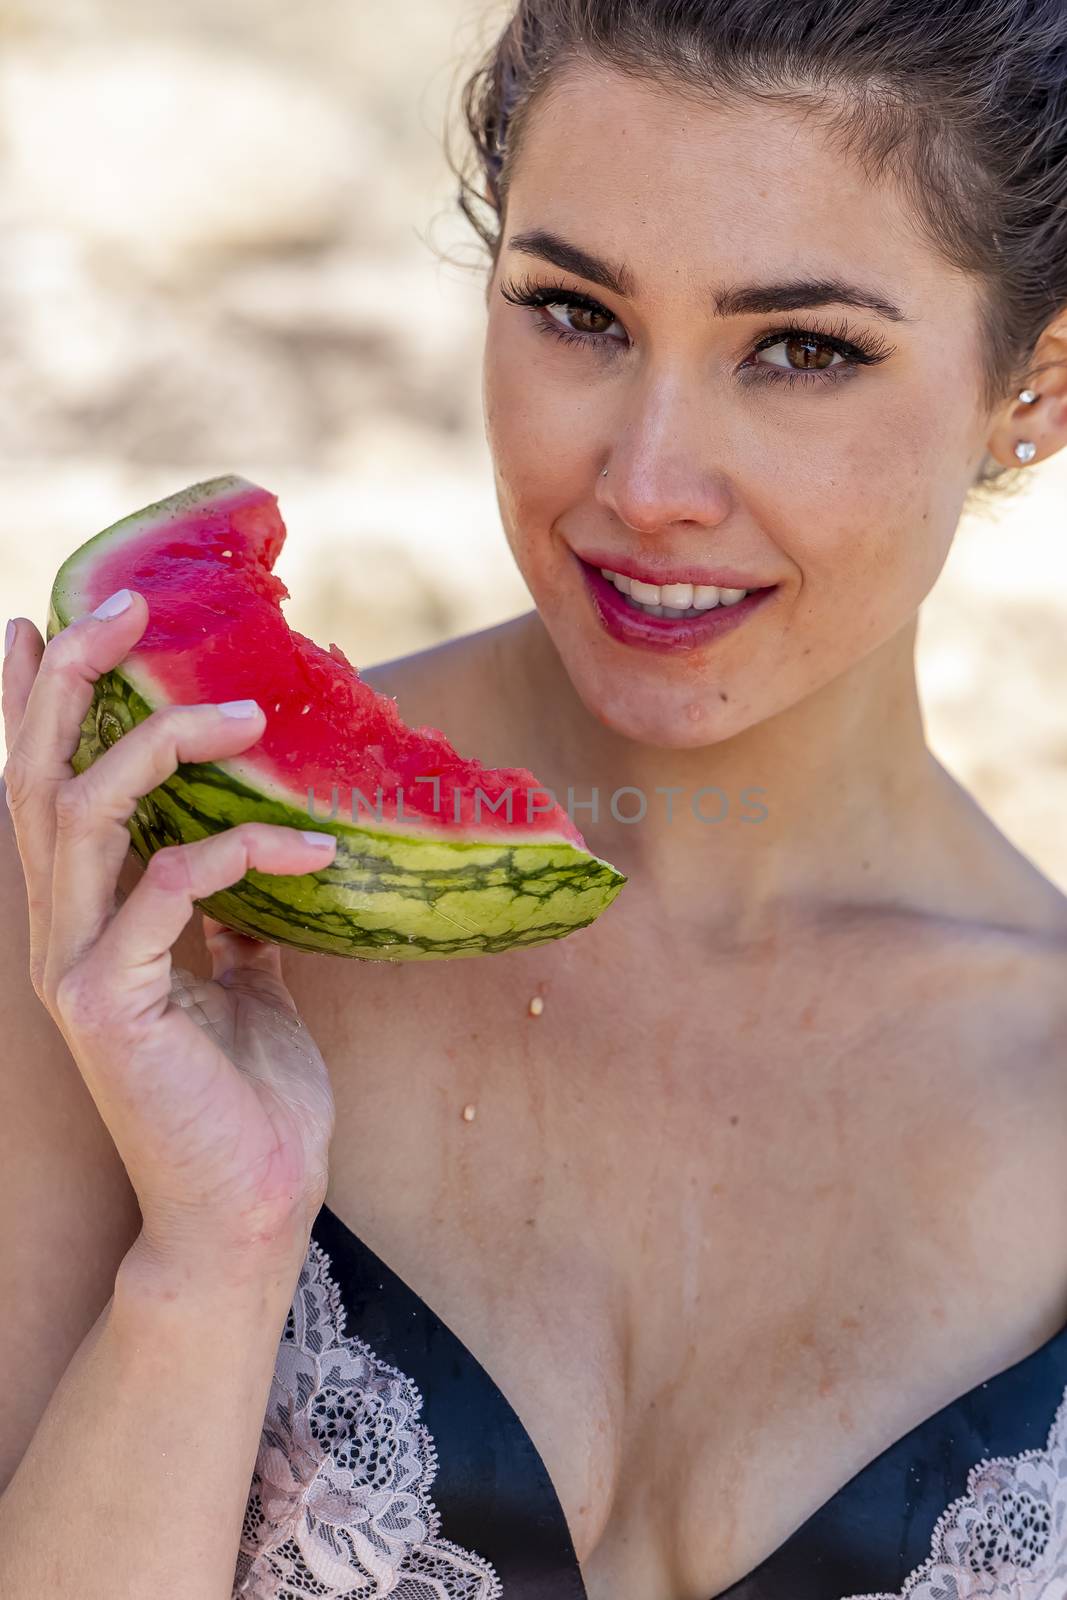 A gorgeous brunette bikini model enjoying watermelon at the beach on a sunny day